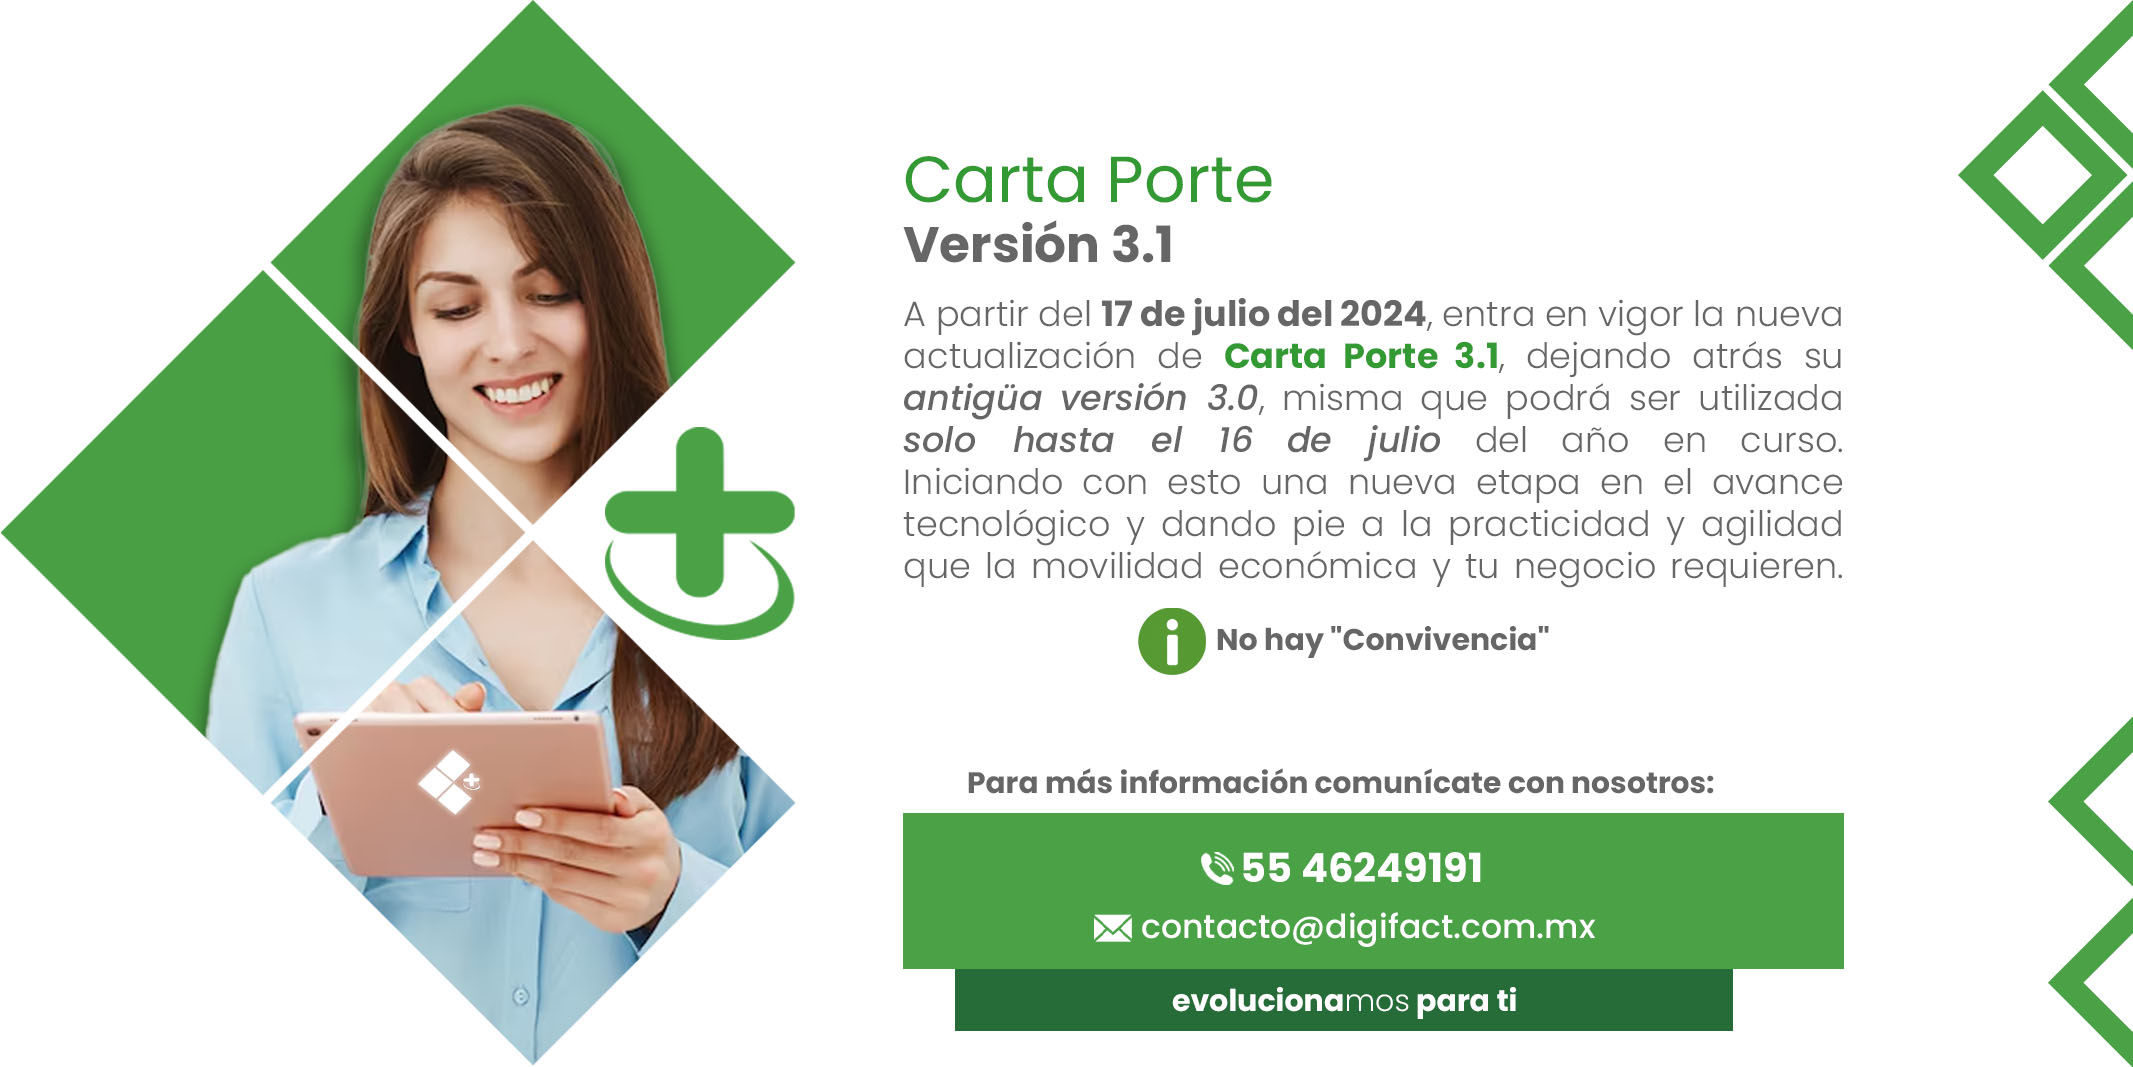 Carta Porte Version 3.1